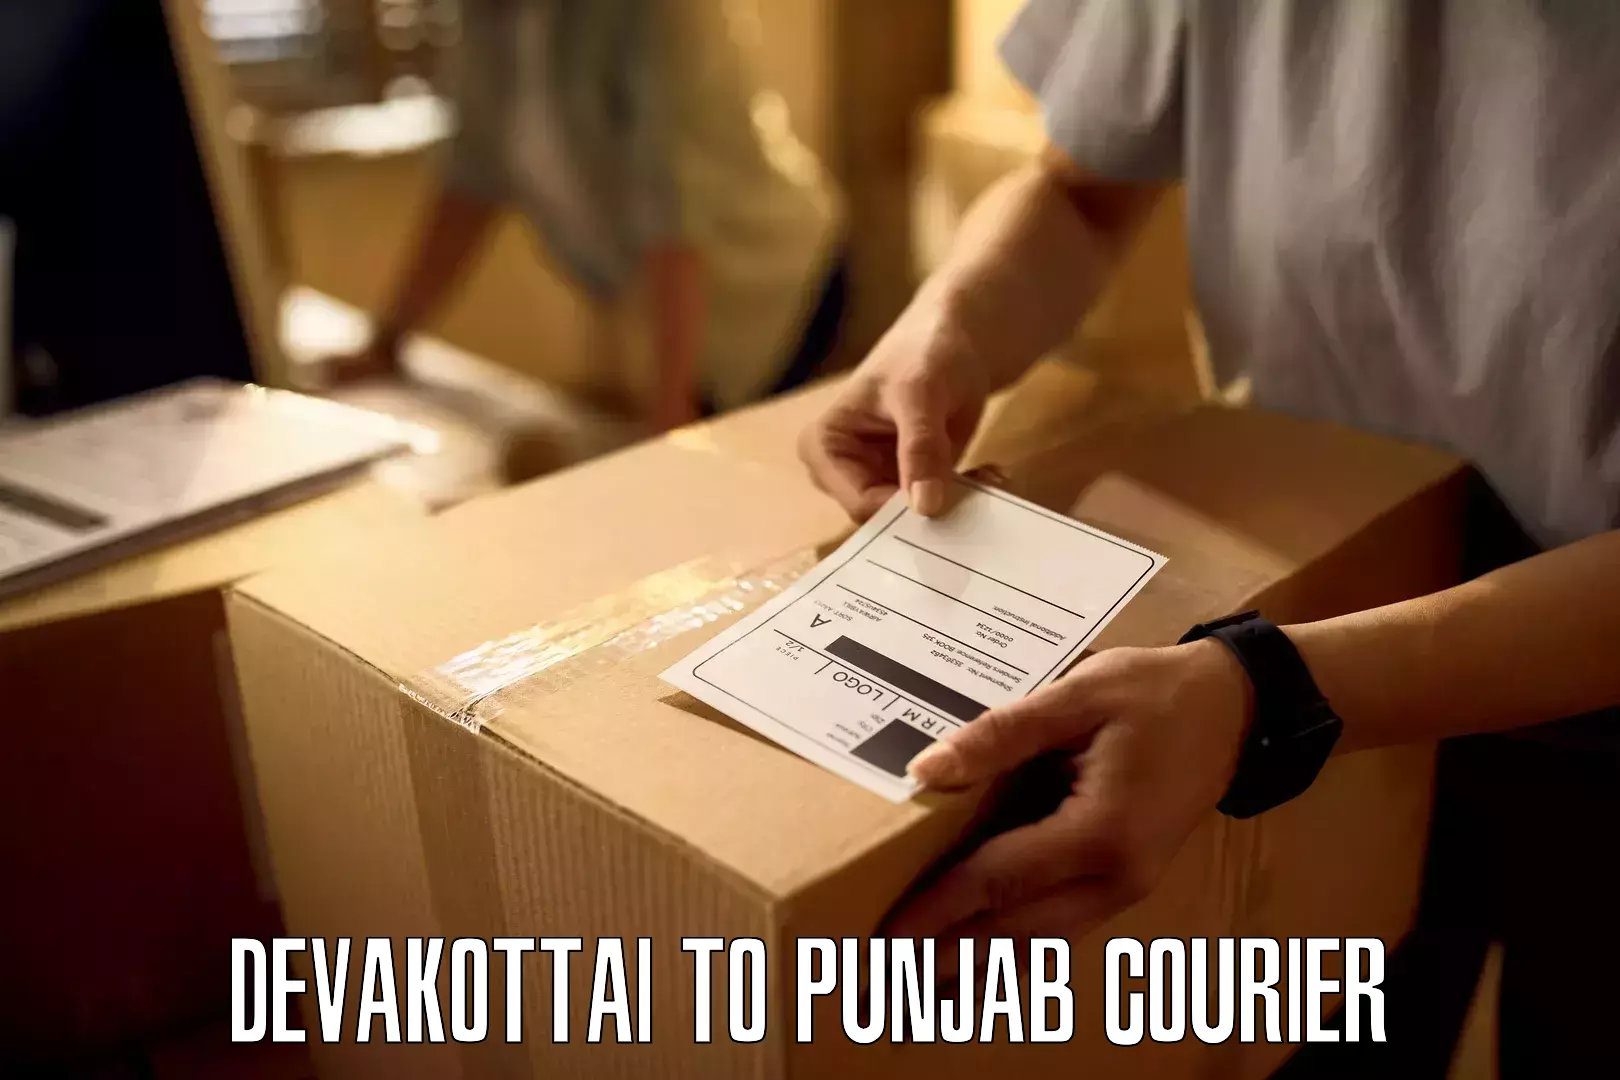 International parcel service Devakottai to Mohali